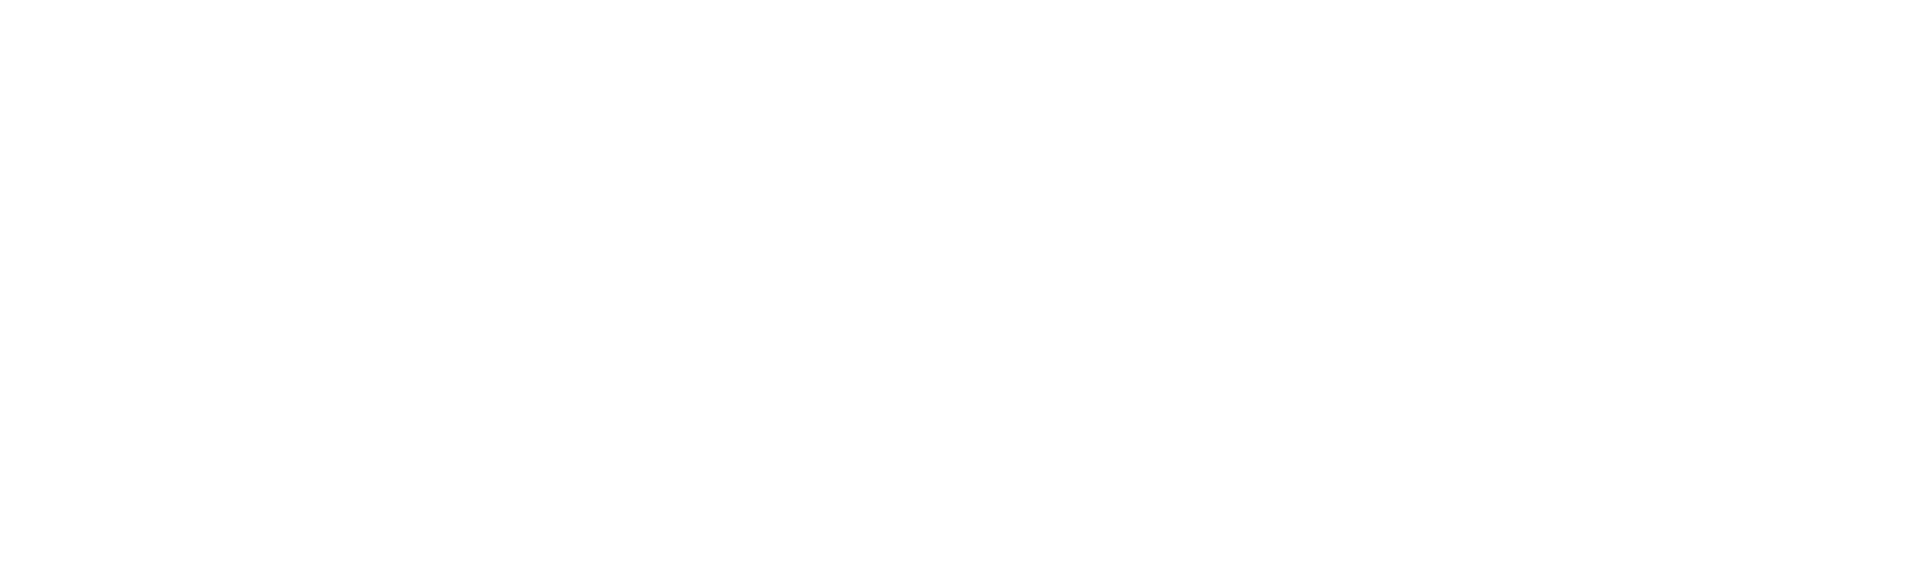 tutor_logo_new